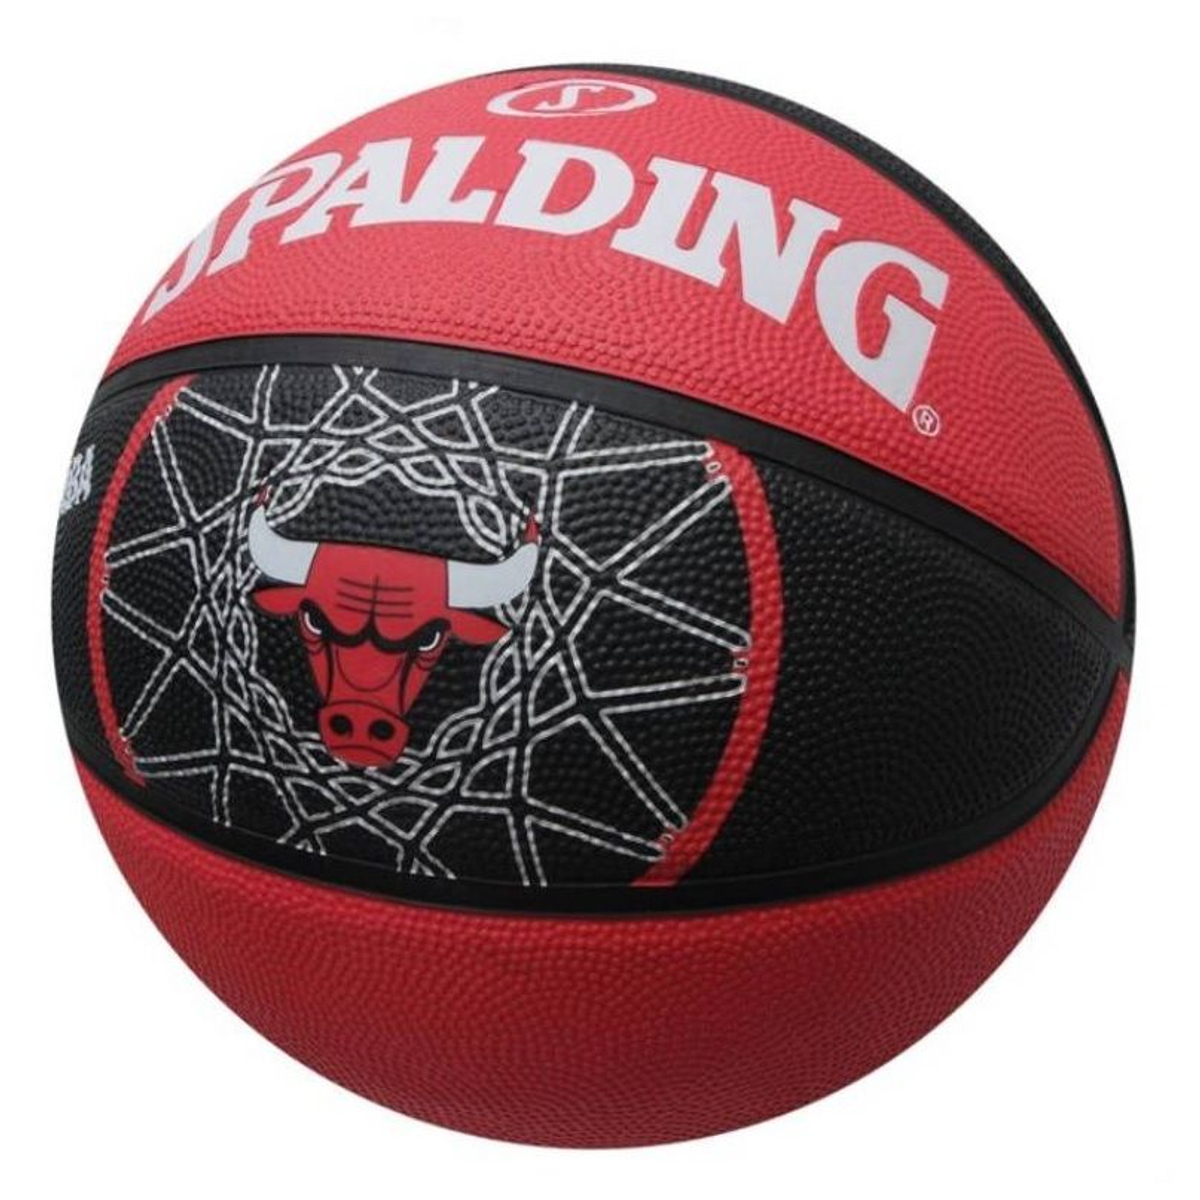 Spalding NBA Chicago Bulls Basketbal